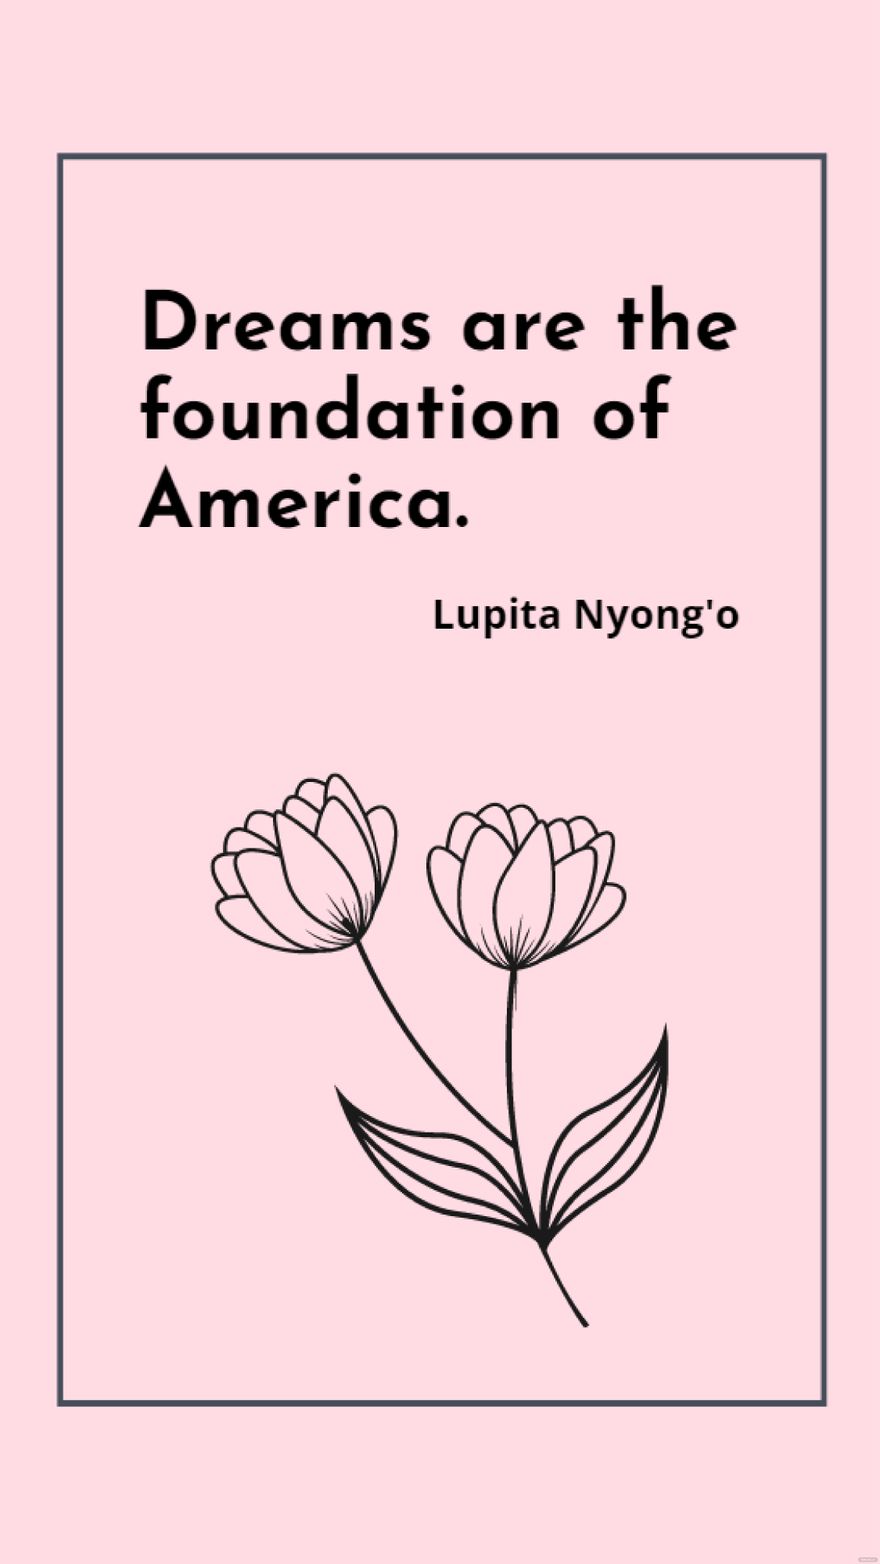 Free Lupita Nyong'o - Dreams are the foundation of America.